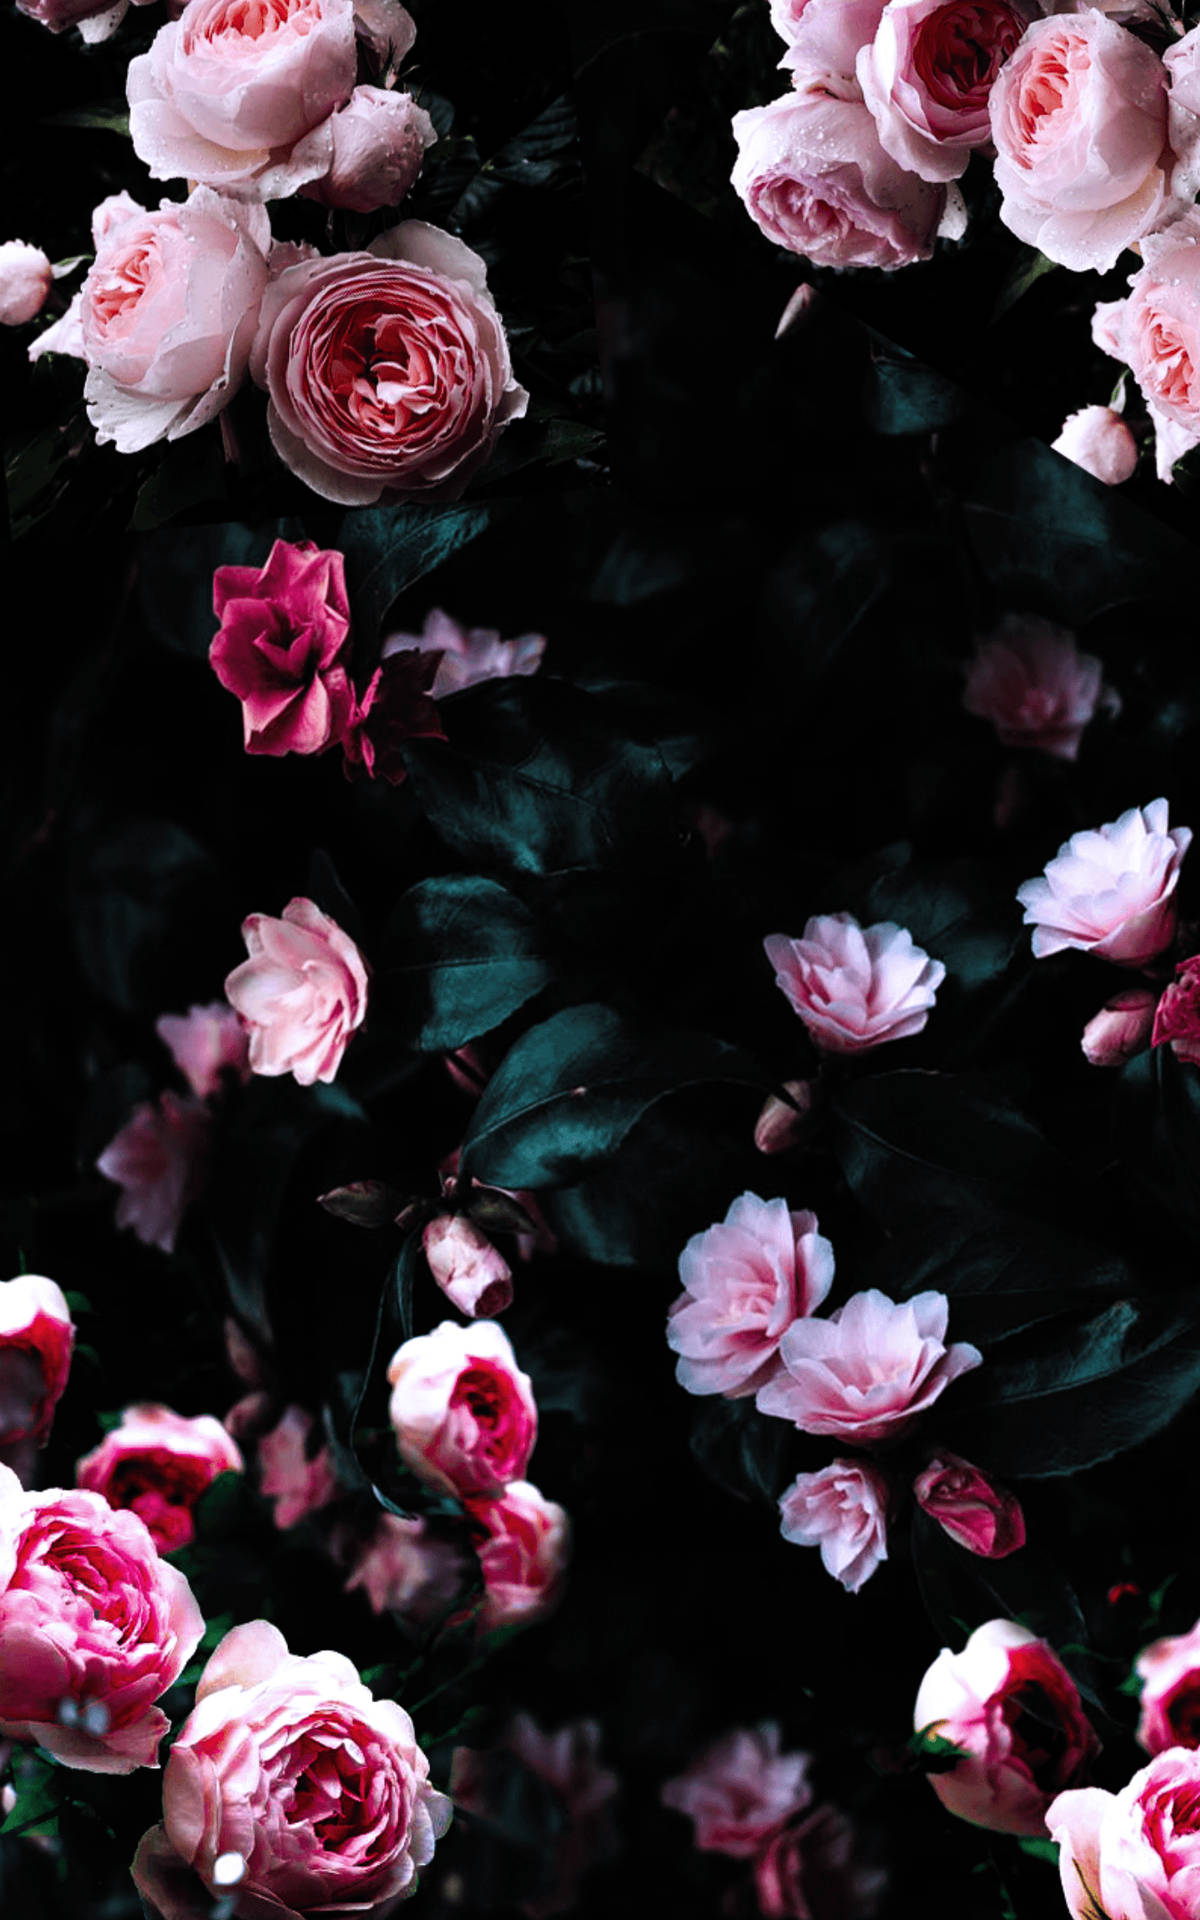 100+] Dark Hd Flowers Wallpapers | Wallpapers.com